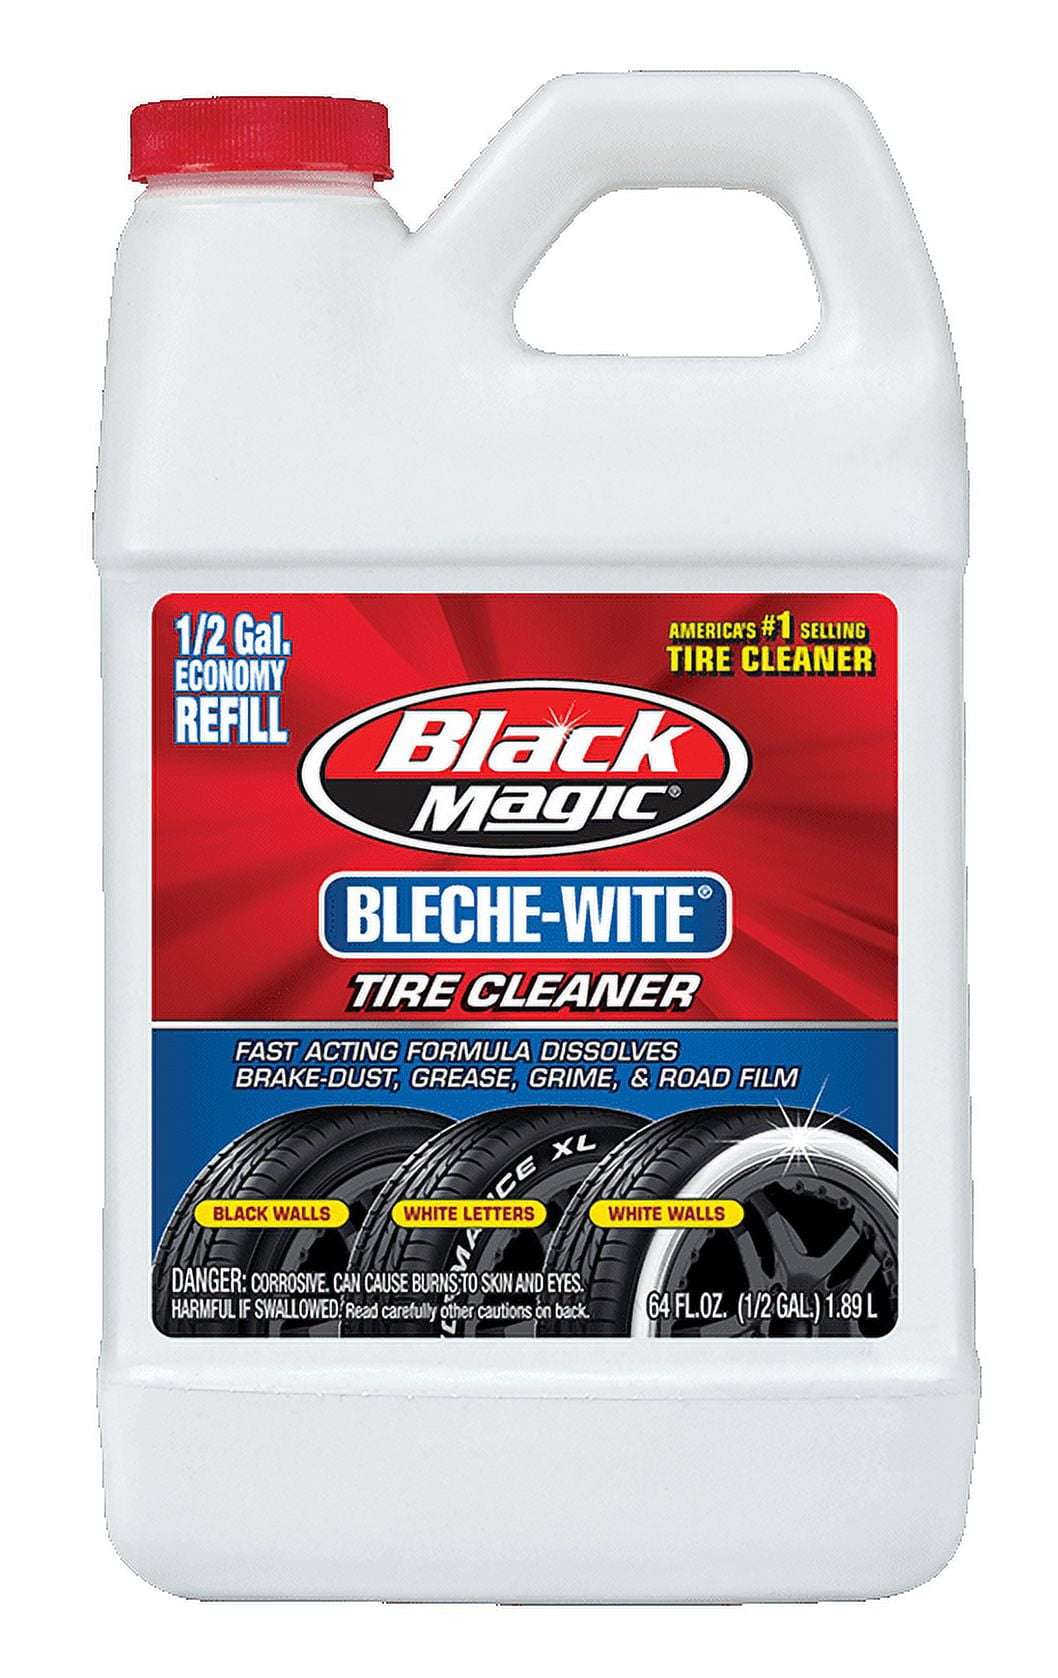 okpetroleum.com: Black Magic Bleche-Wite Tire Cleaner Half Gallon